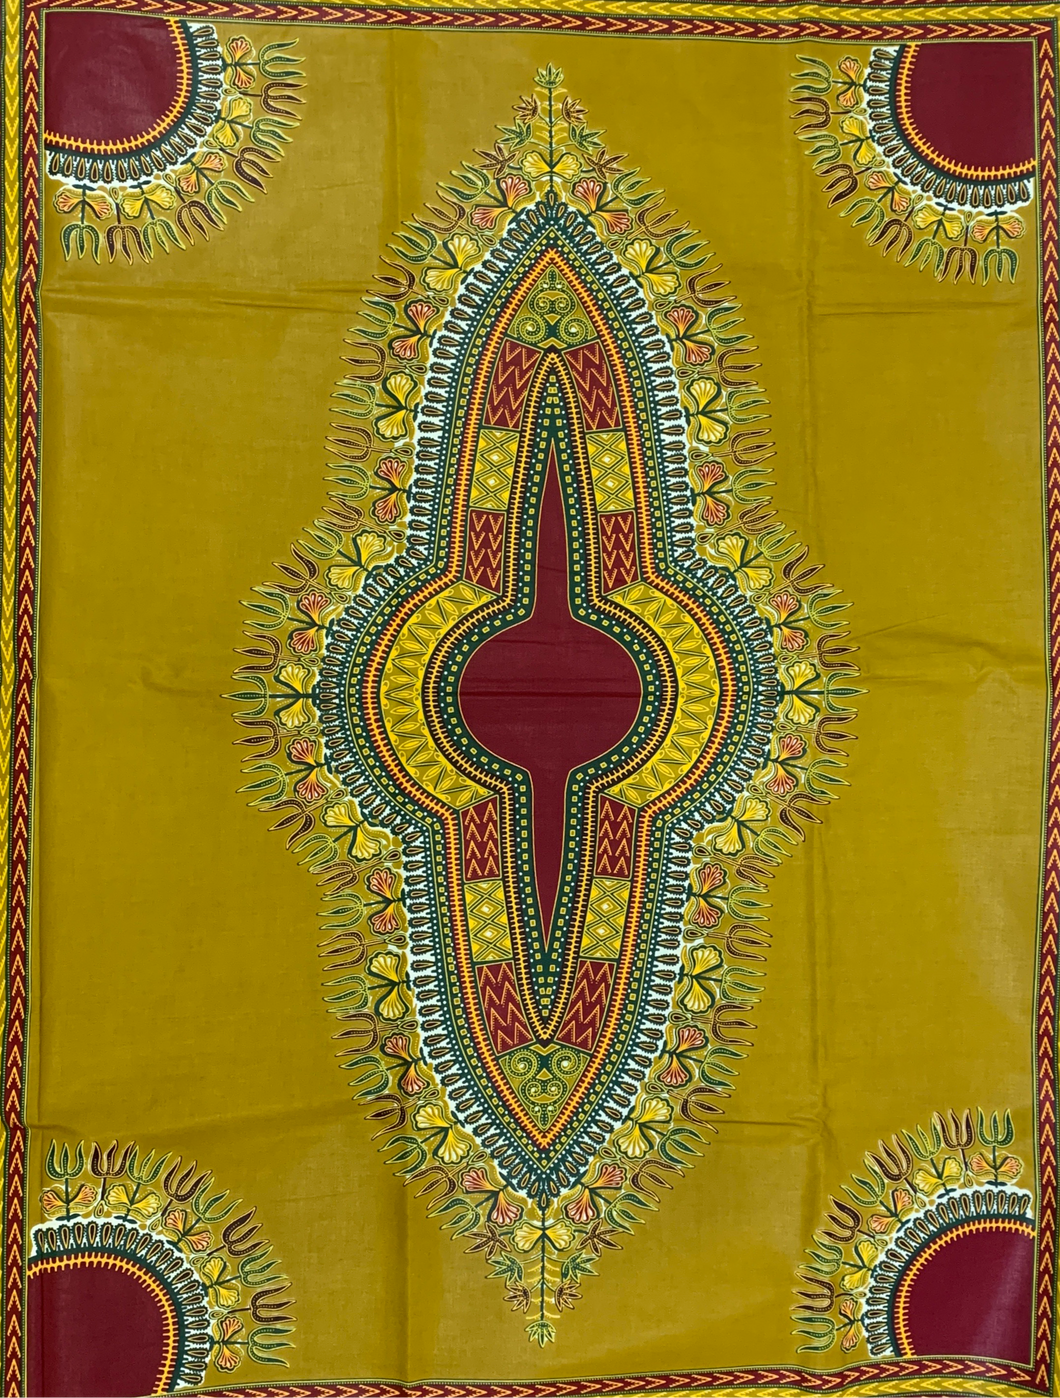 Gold and Maroon Dashiki Fabric